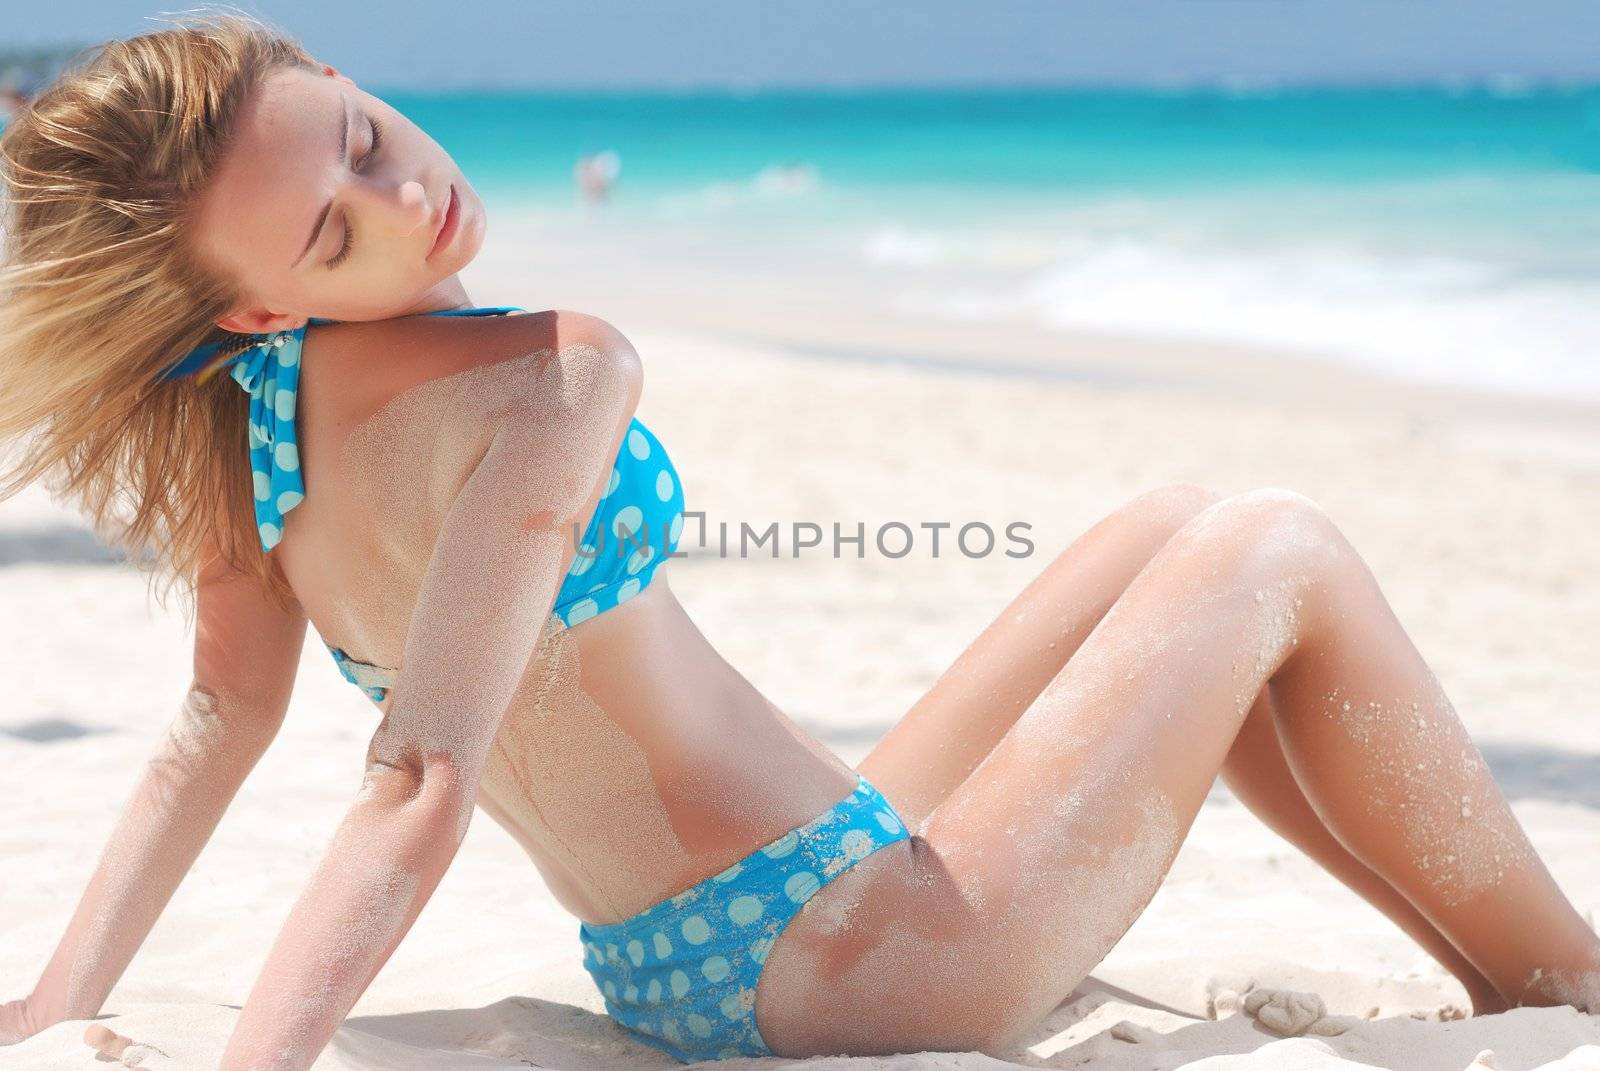 Bikini girl on caribbean beach